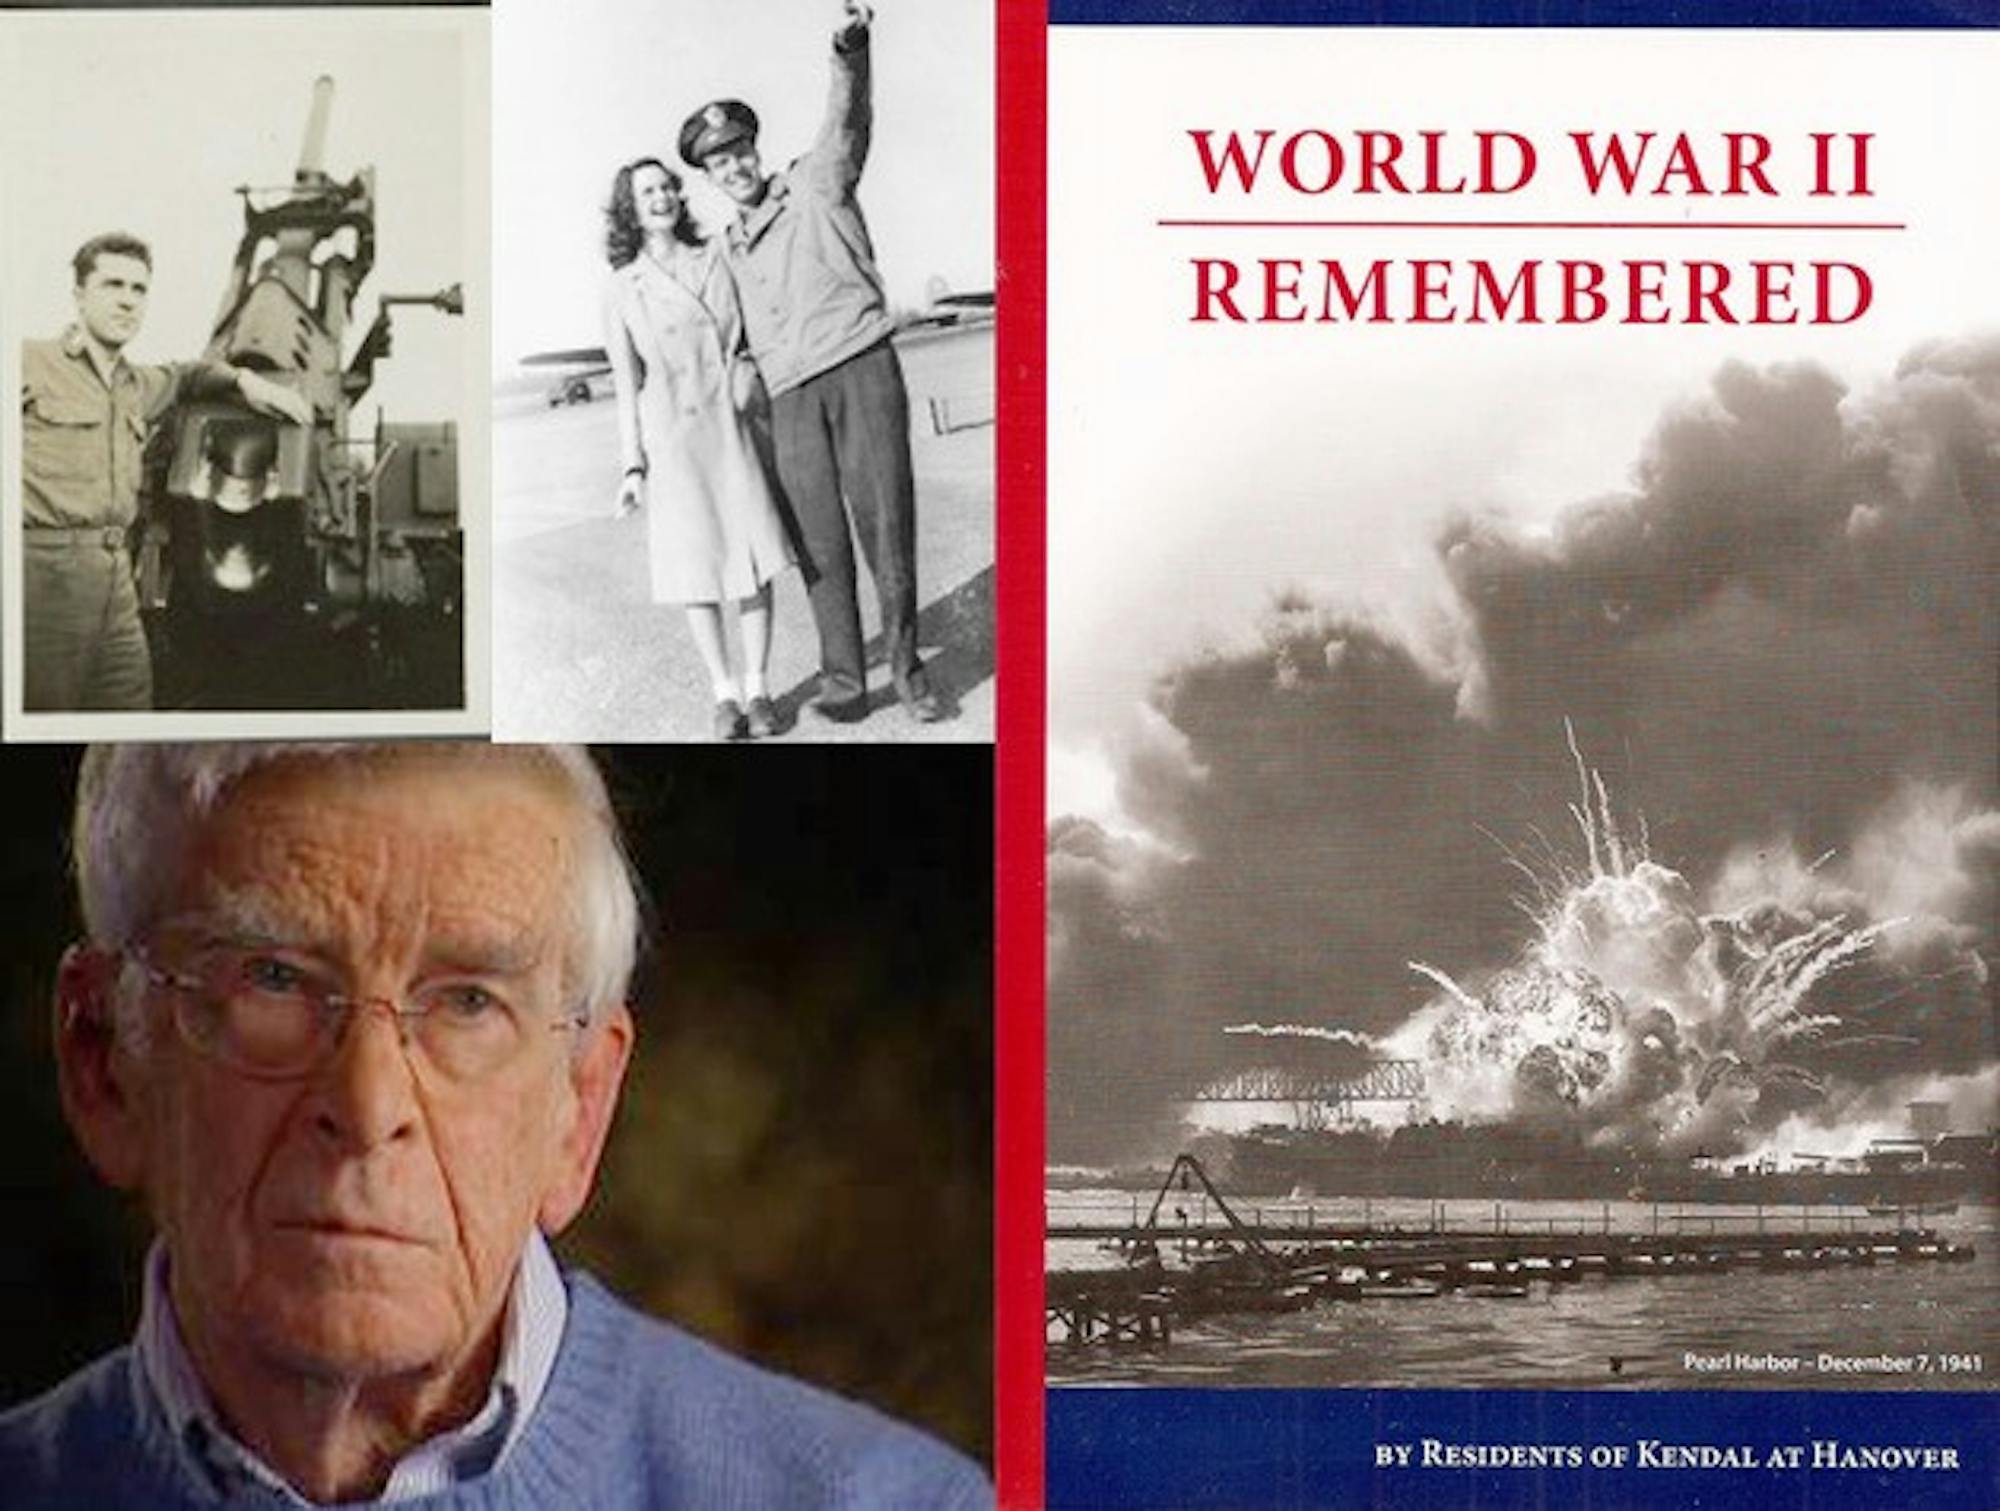 World War II survivors and contributors to 